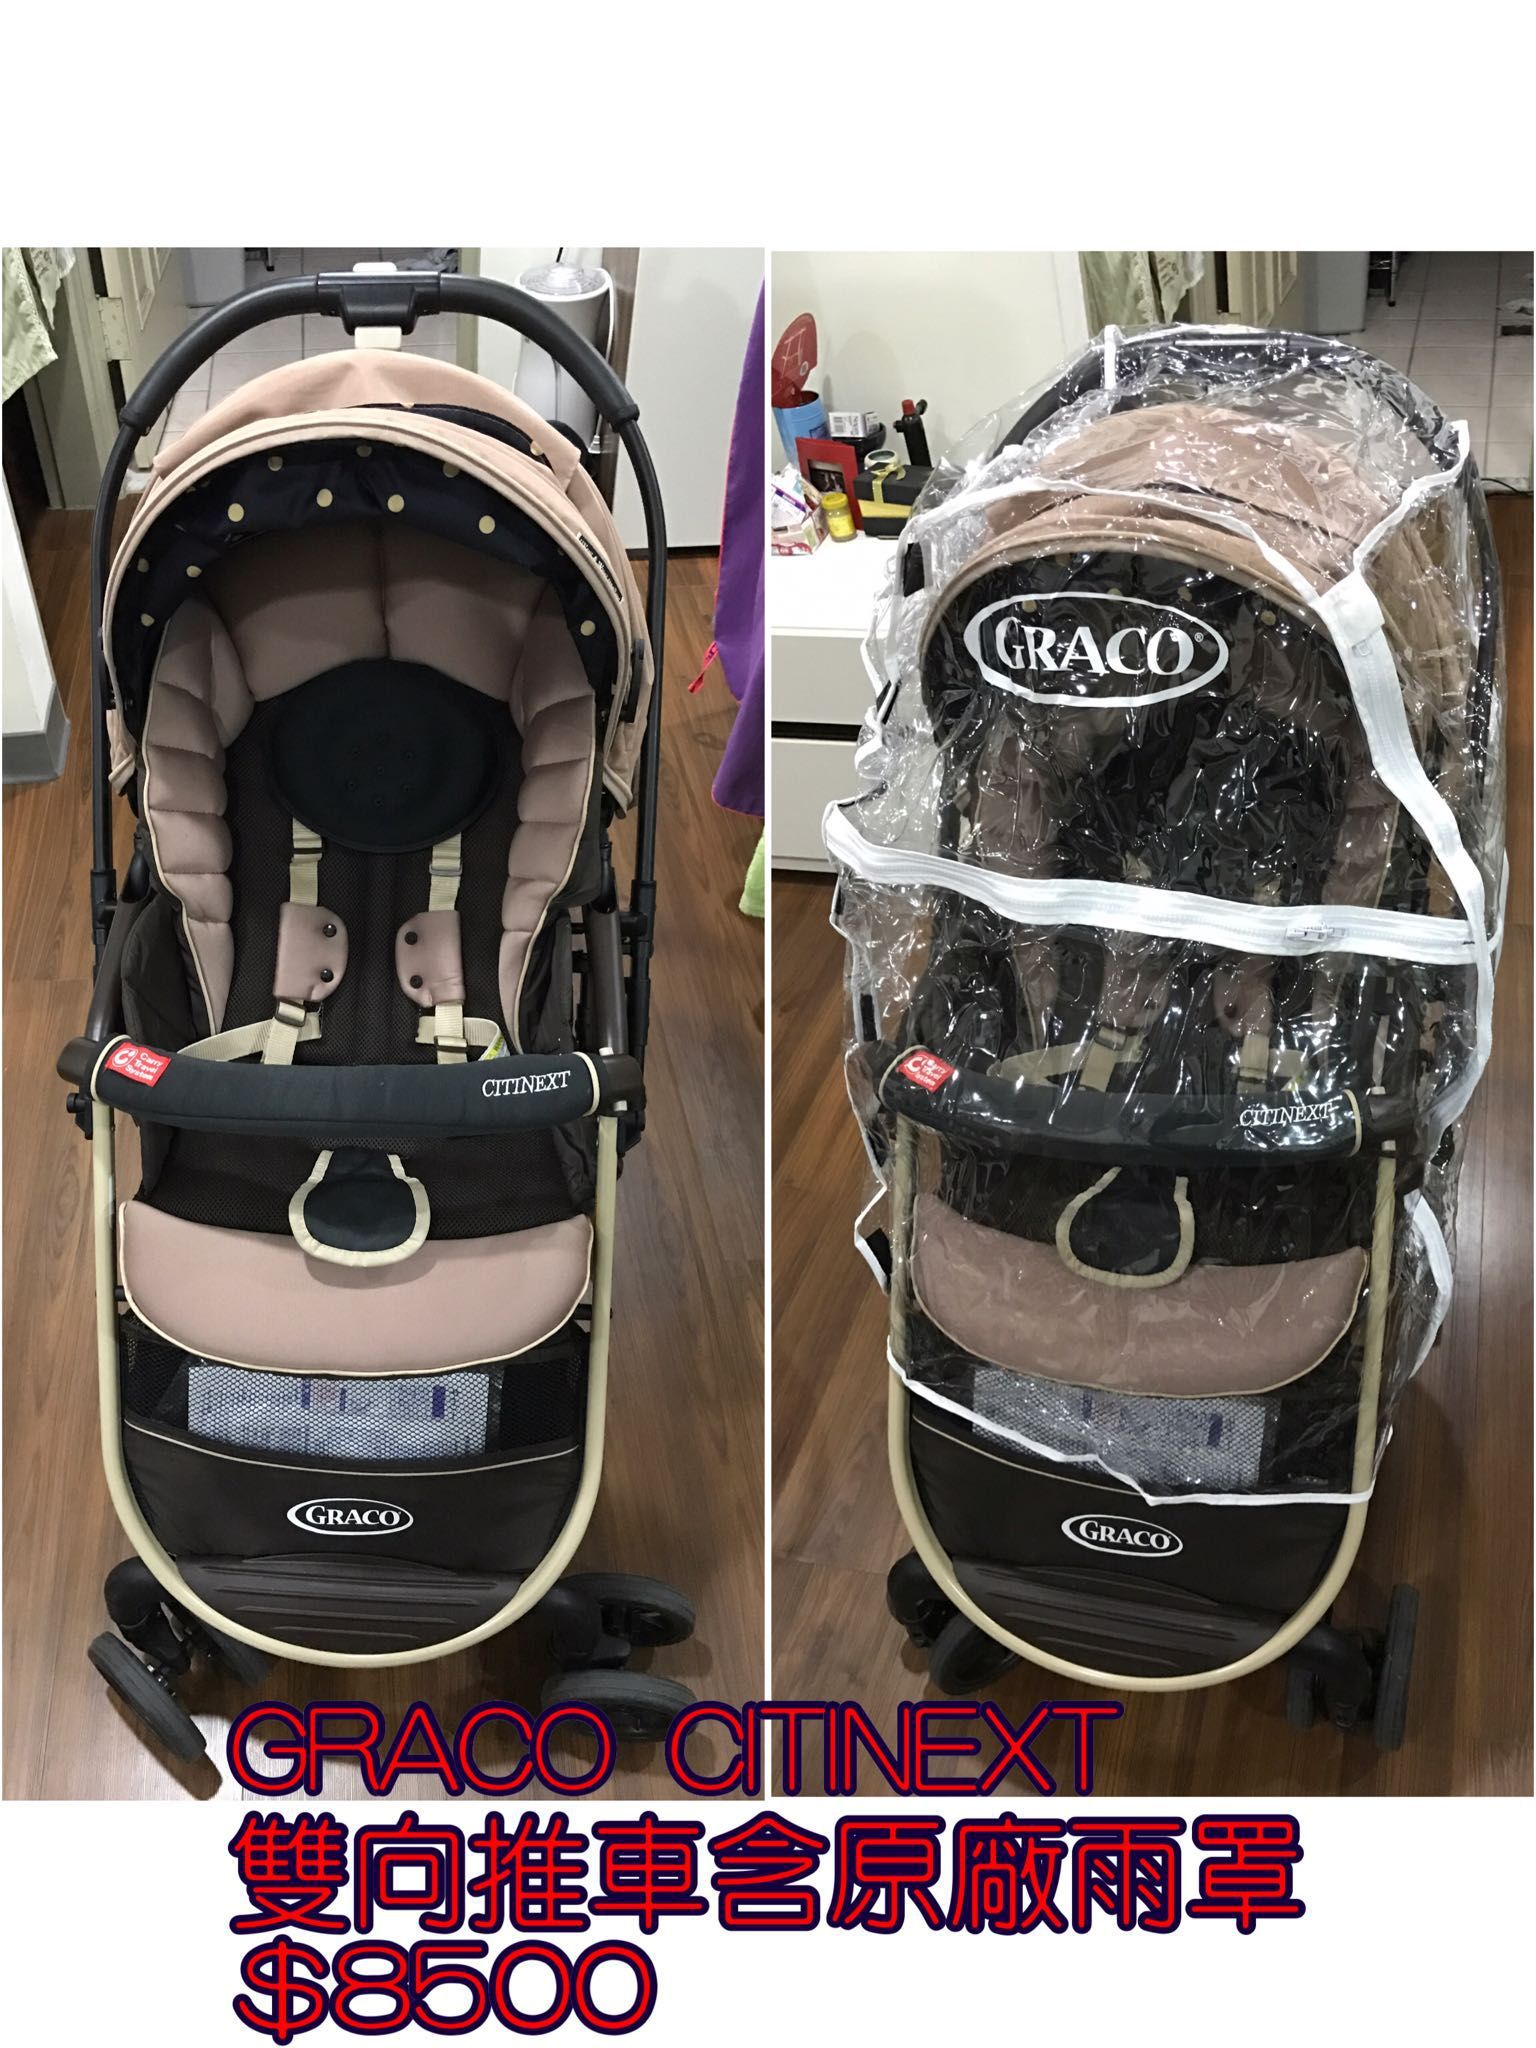 GRACO CITINEXT 購物型雙向嬰幼兒手推車-櫻花步道